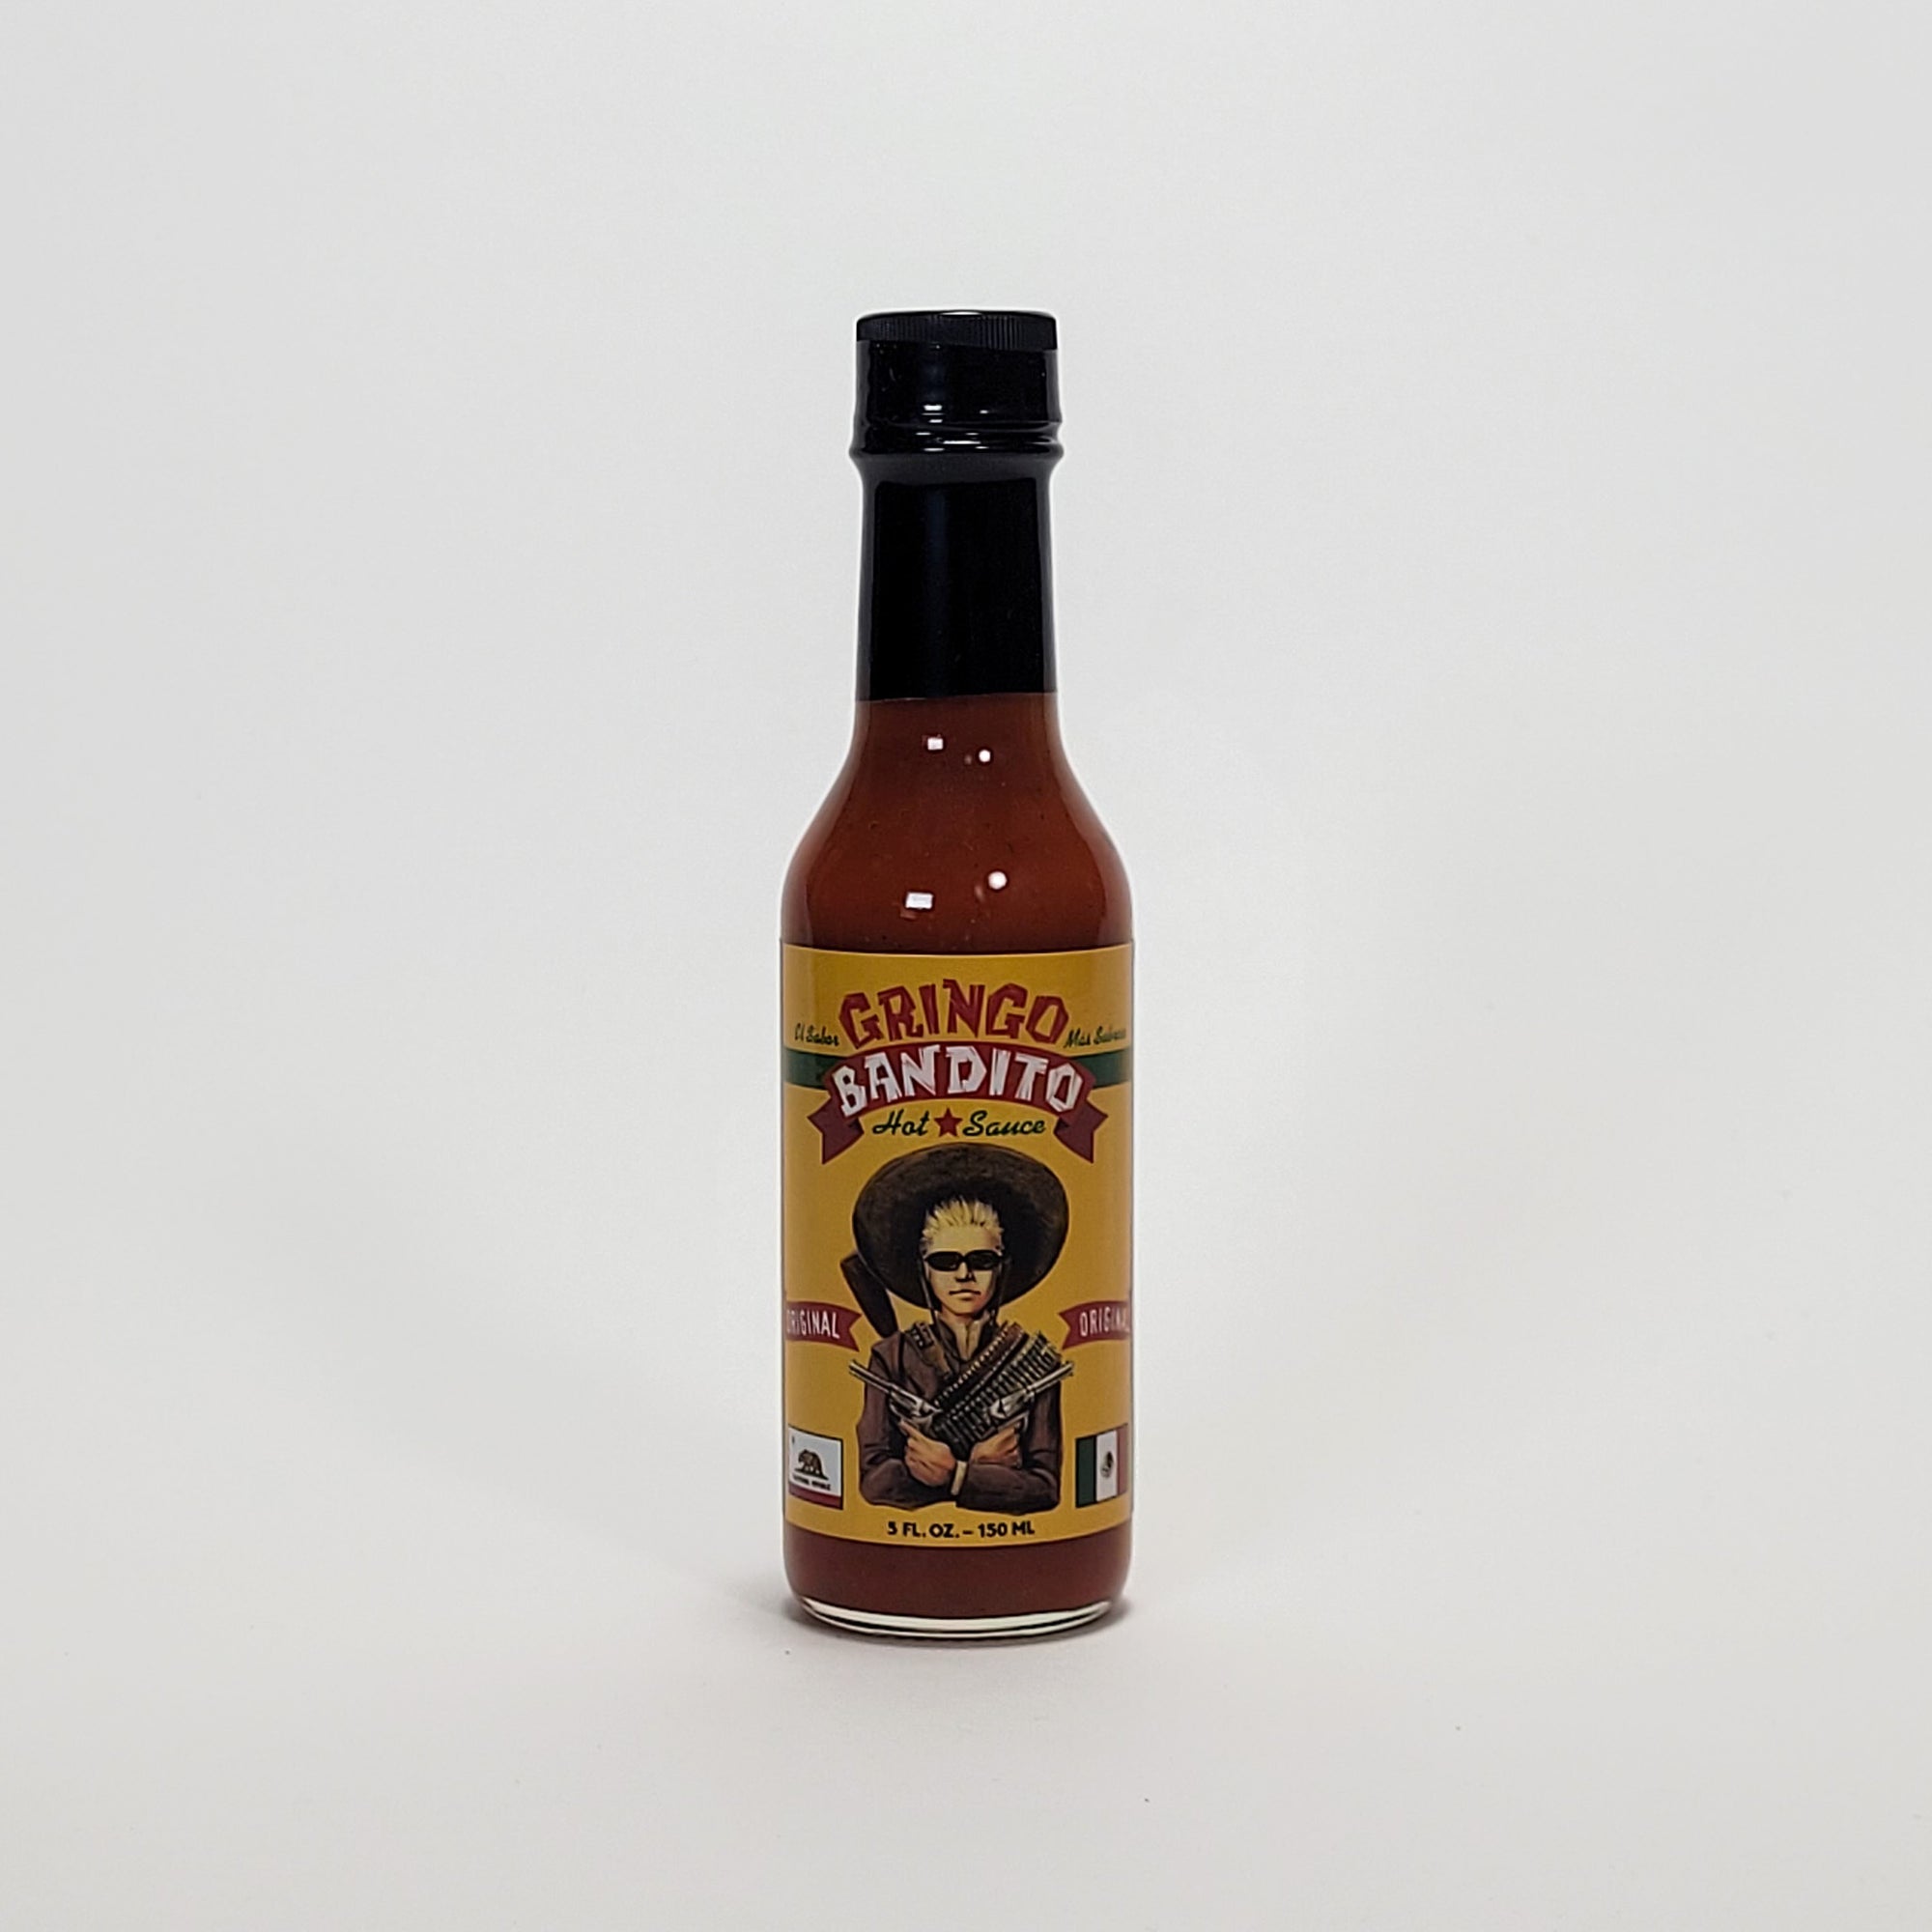 Gringo Bandito Original hot sauce